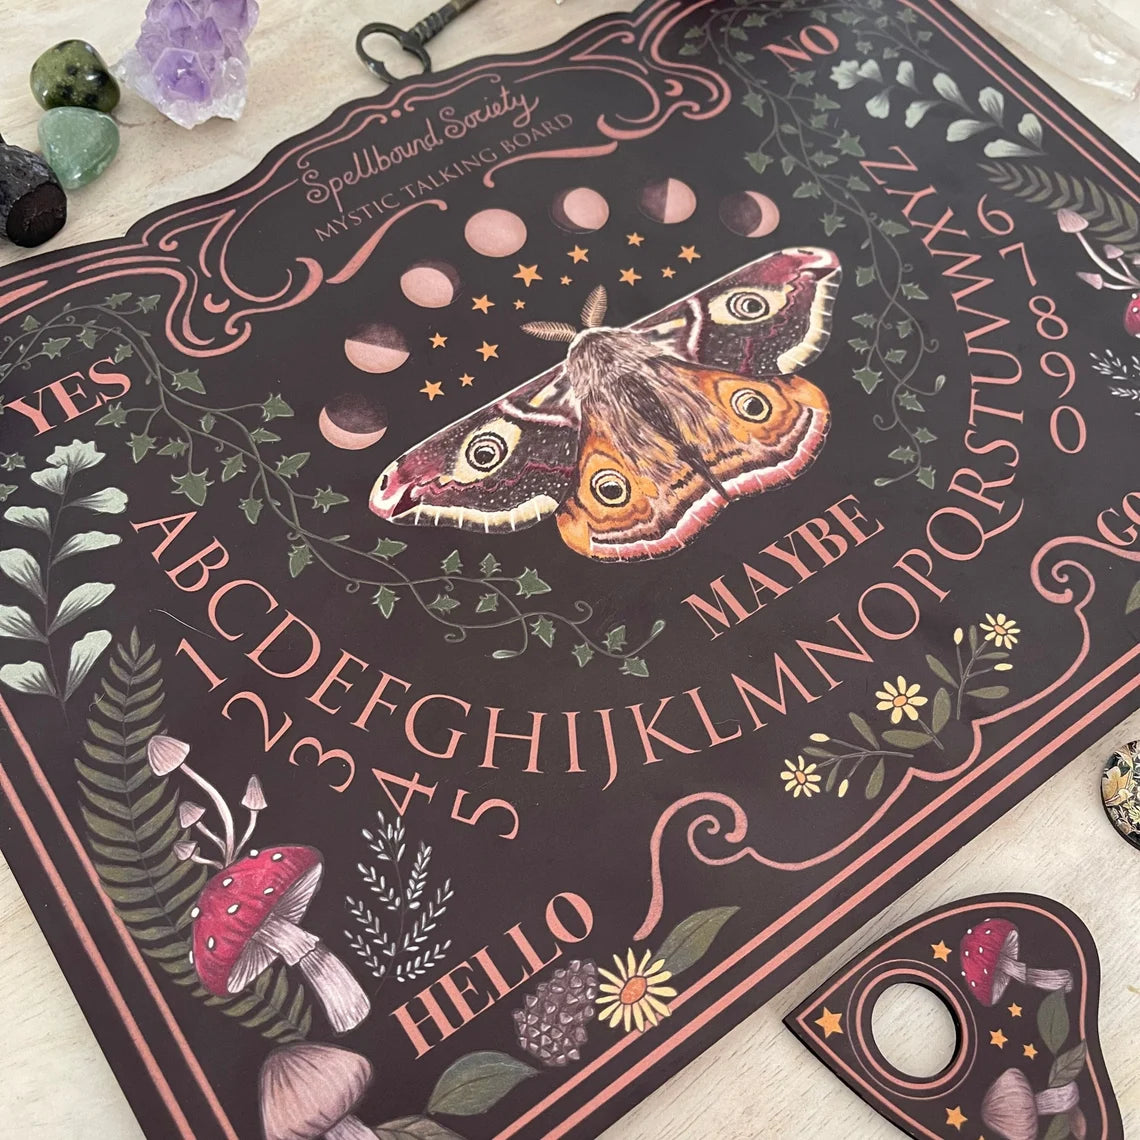 Beautiful hand-drawn dark moth and mushroom ouija board spirit board for witchcraft